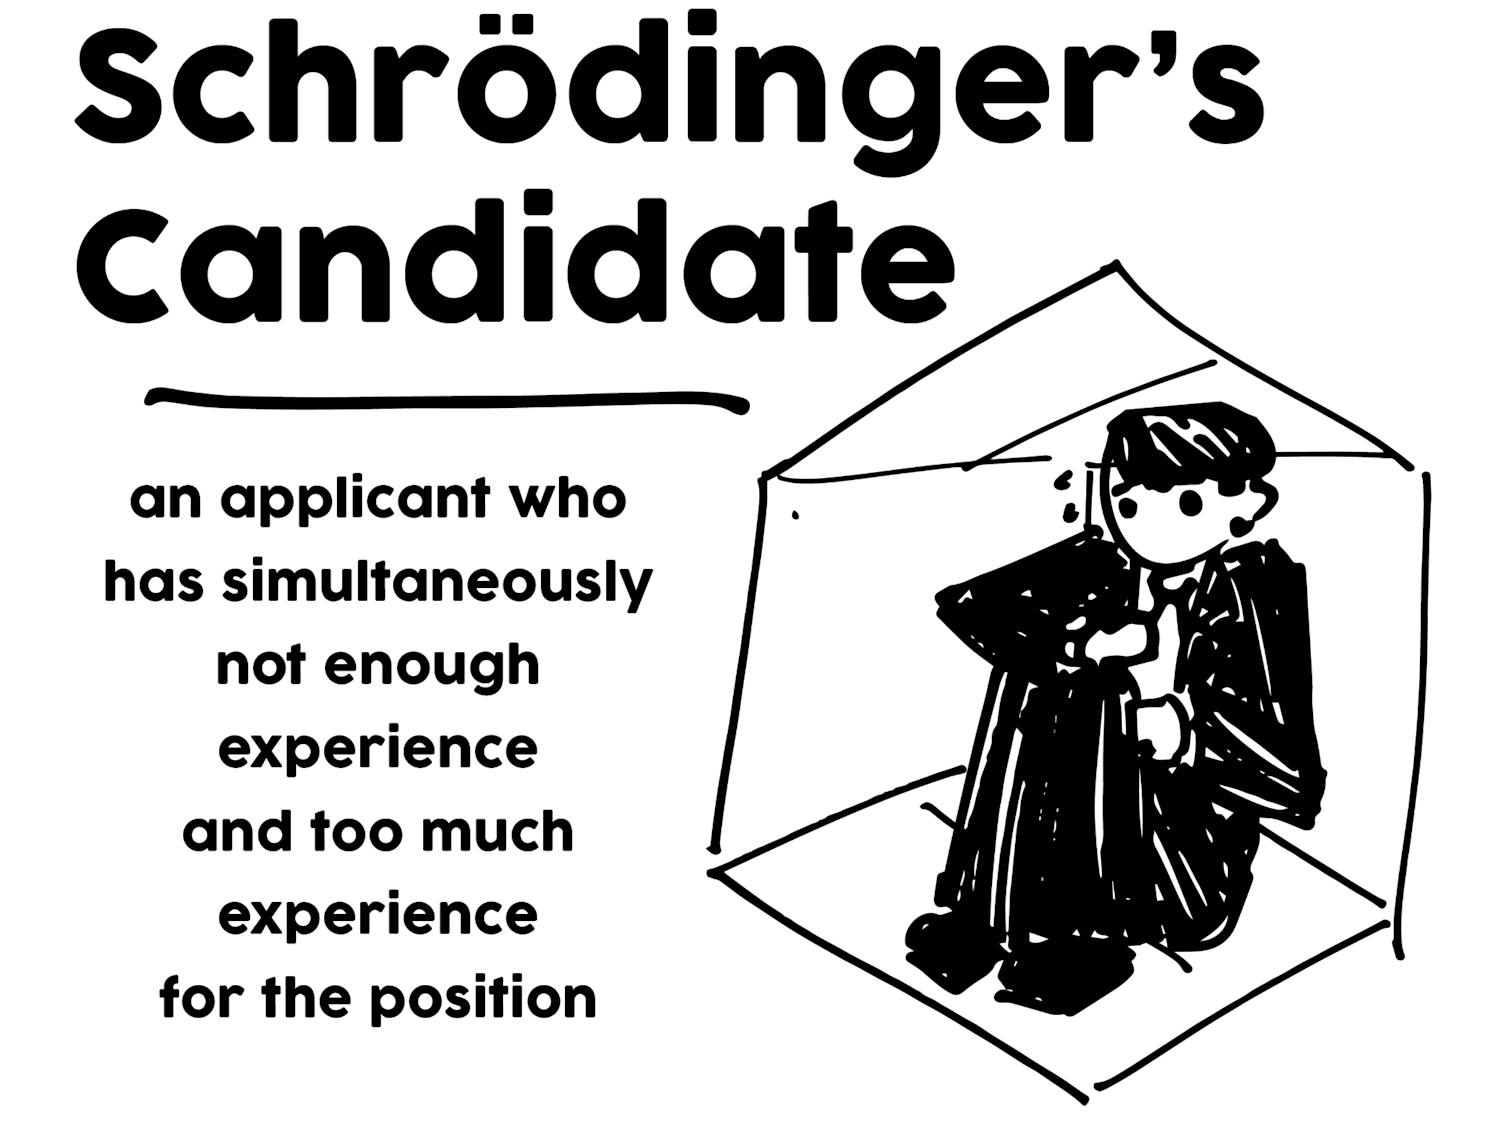 Schrodinger's candidate